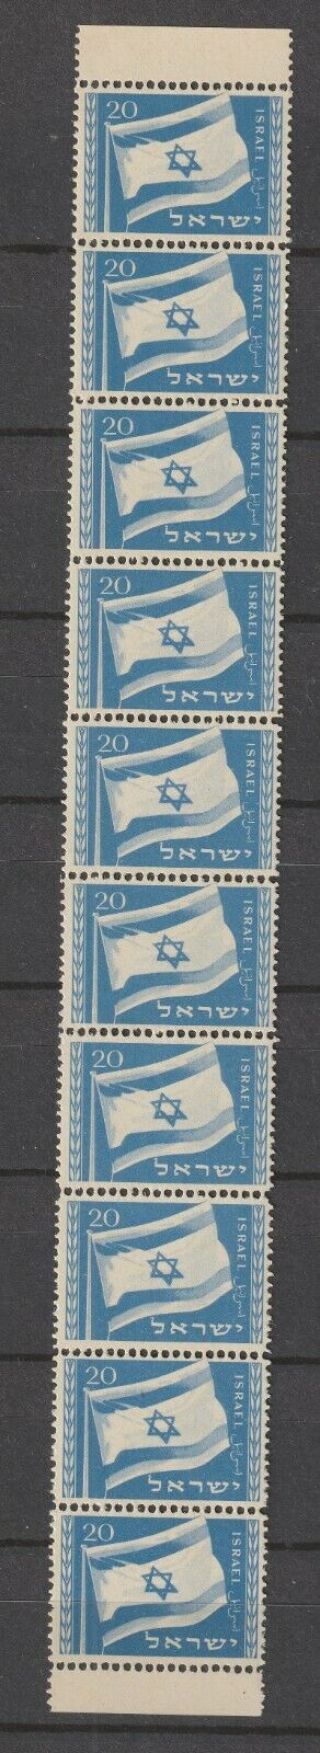 Israel 1949 National Flag Strip Of 10 Mnh